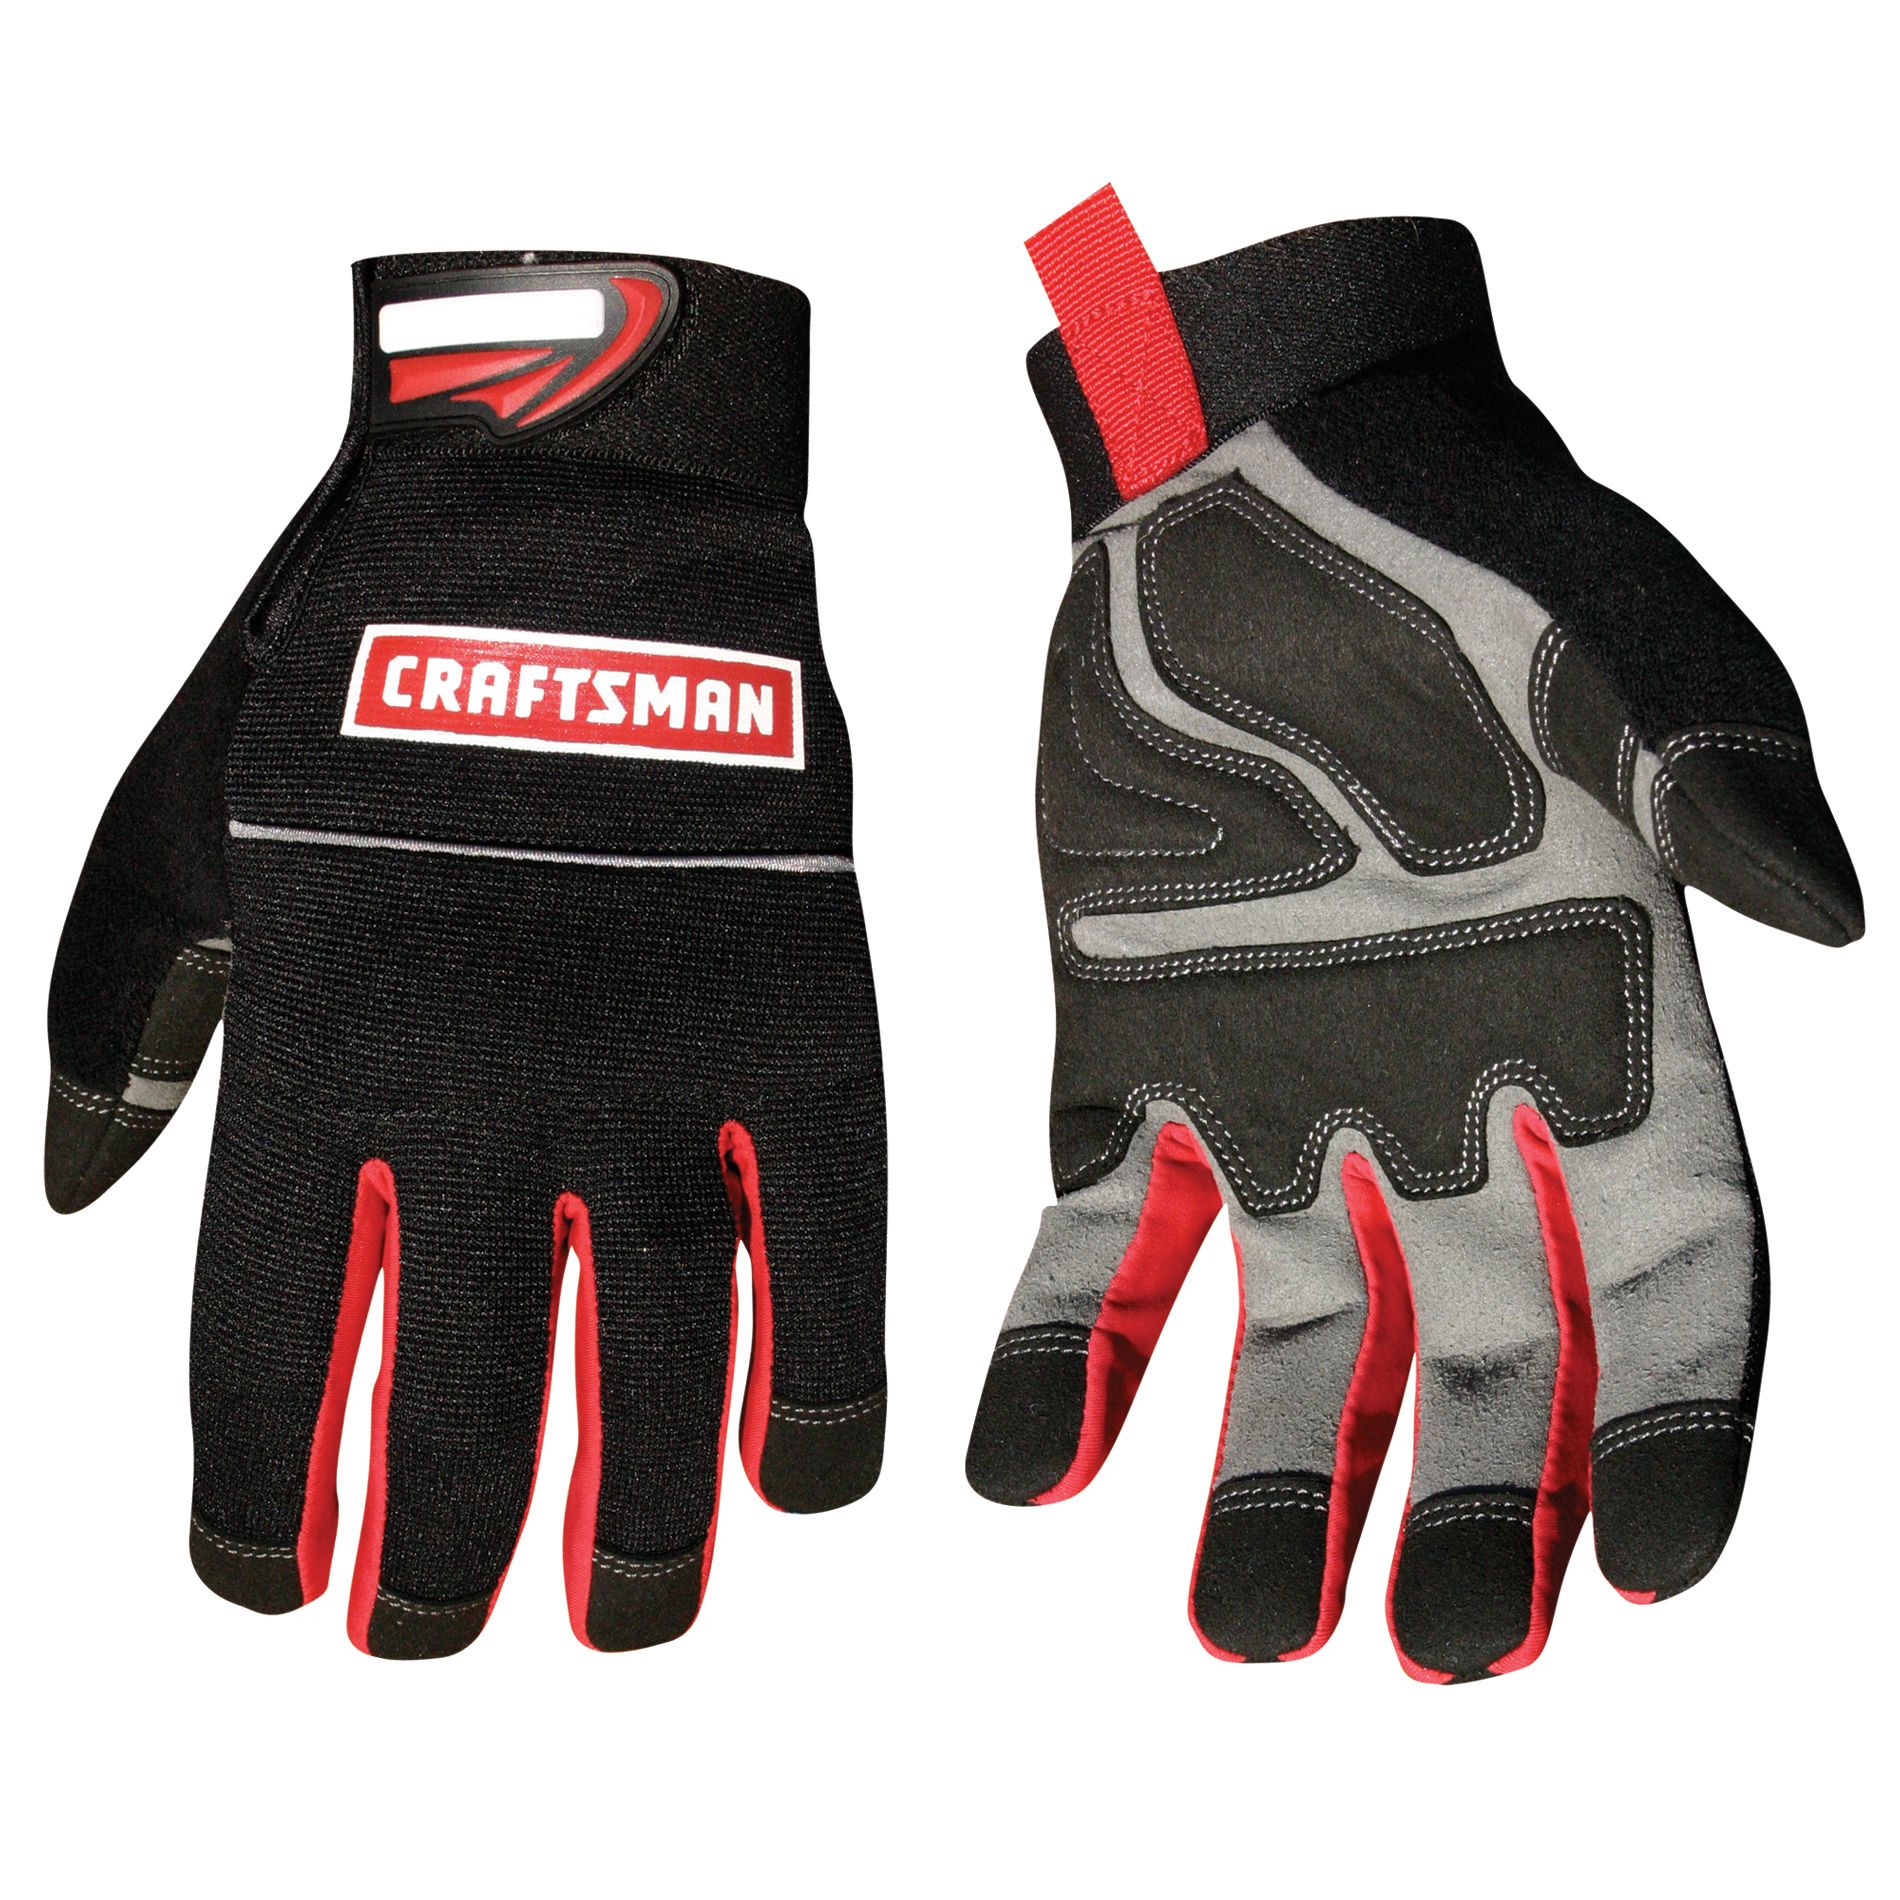 Craftsman Utility Gloves - Extra Large